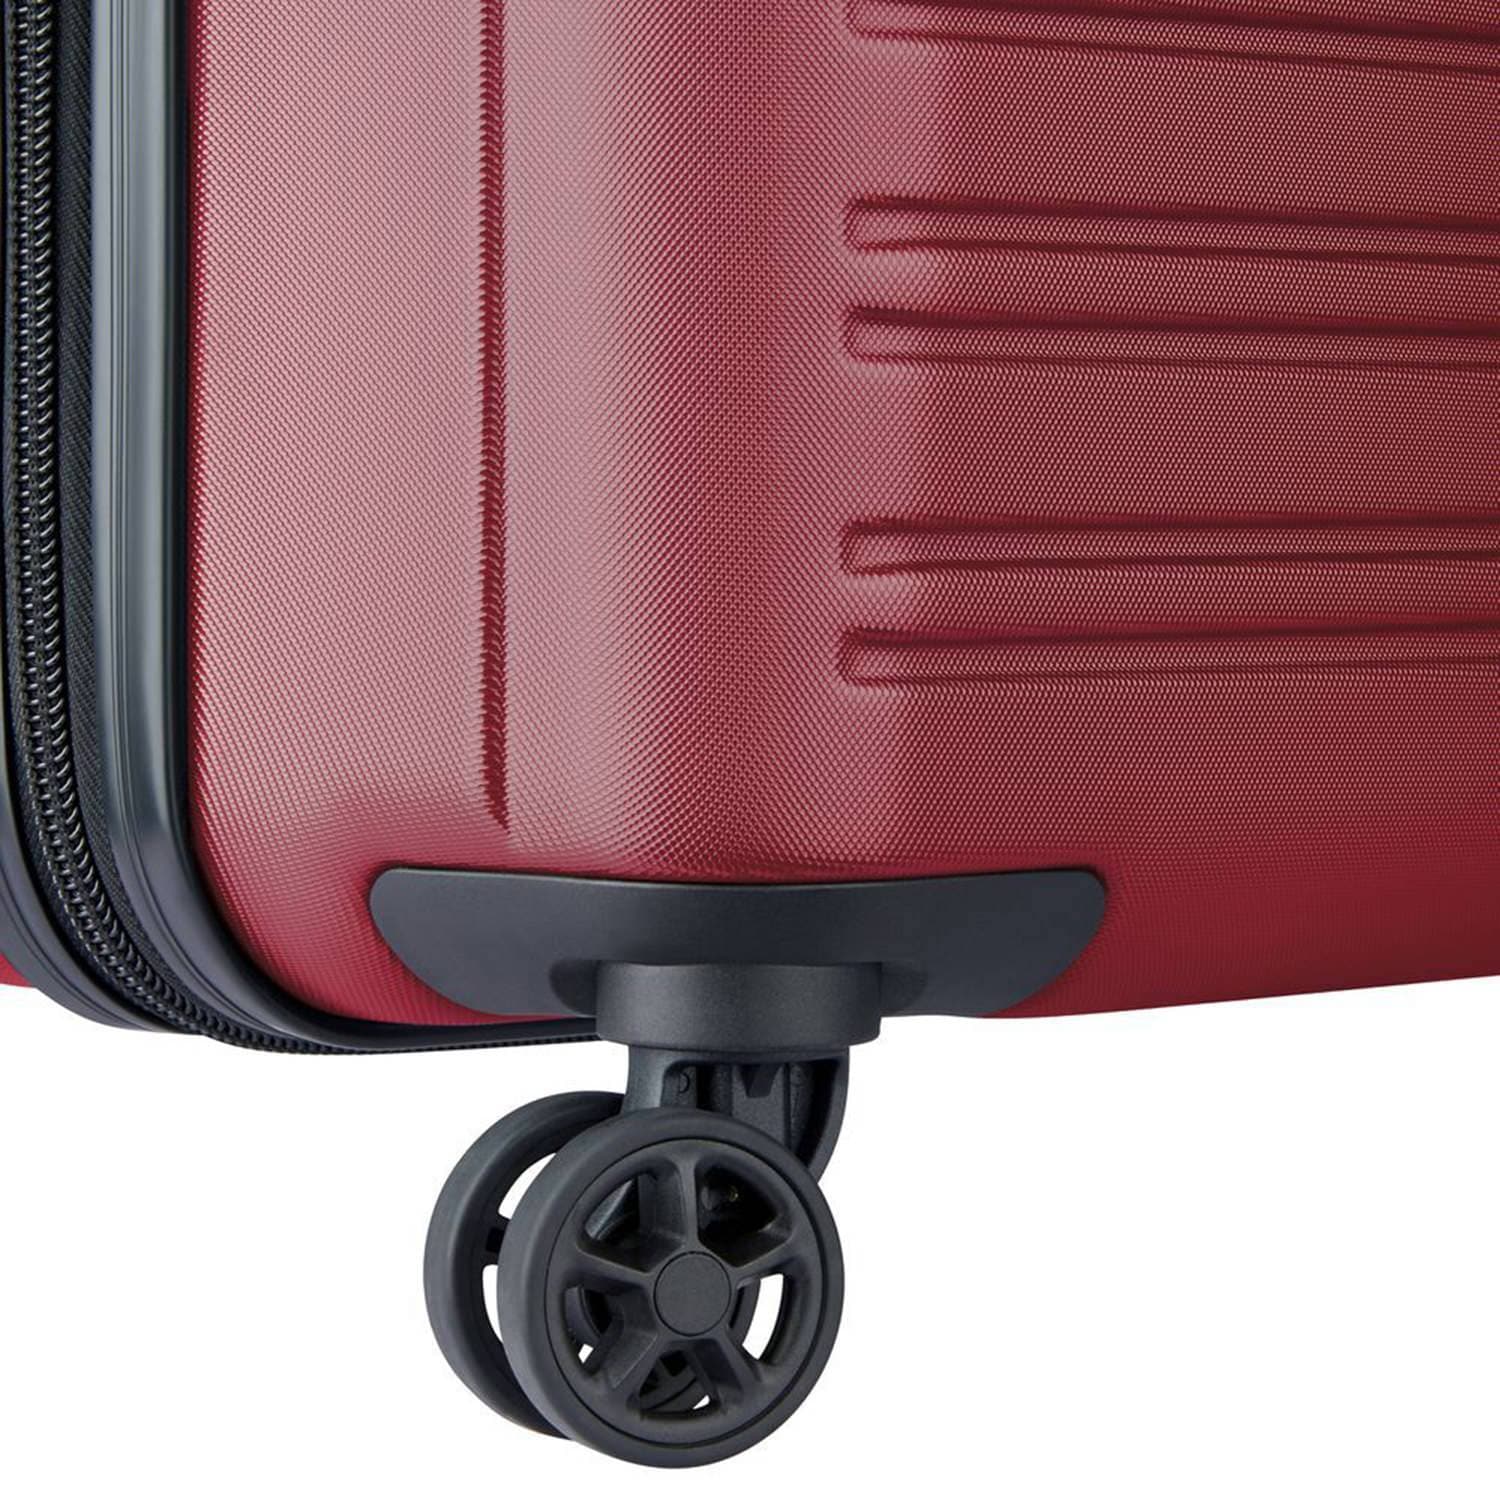 Delsey Segur 2.0 4 Double Wheel Trolley Bag - Red, 78 cm - 00205882104 RED - Jashanmal Home